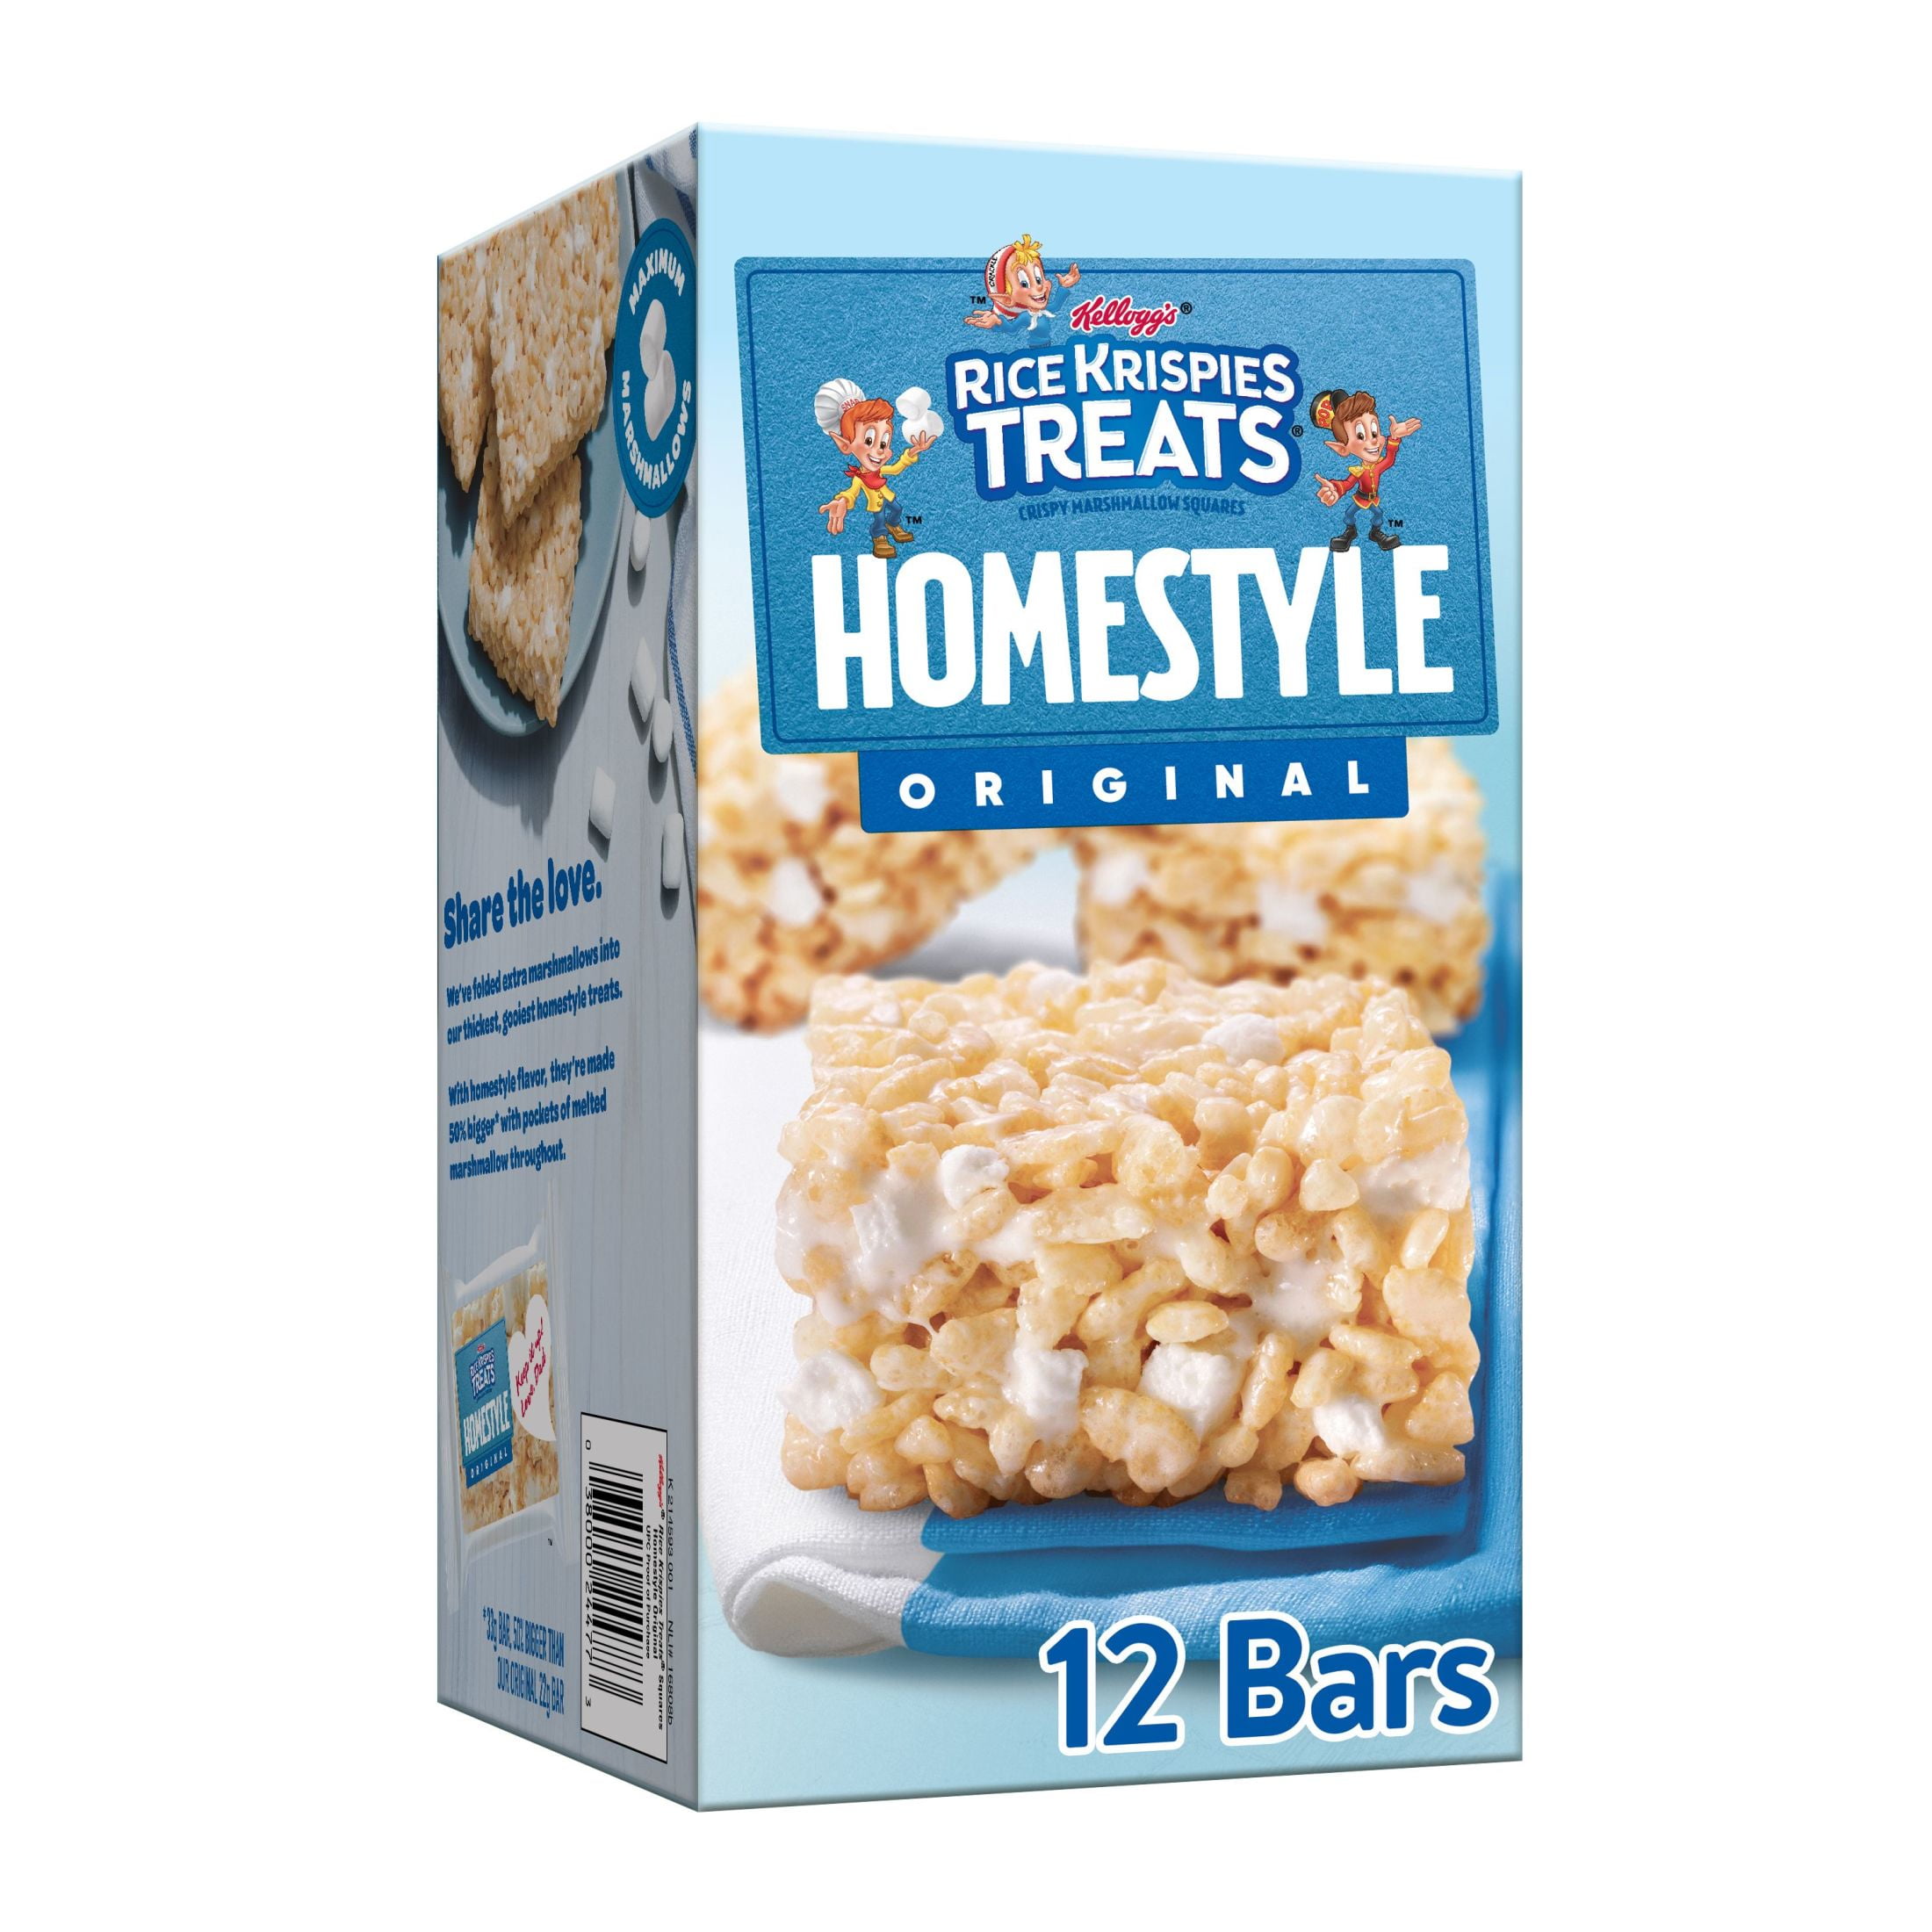 Rice Krispies Treats Crispy Marshmallow Cereal Bars, Original Homestyle, 13.96 oz, 12 Count